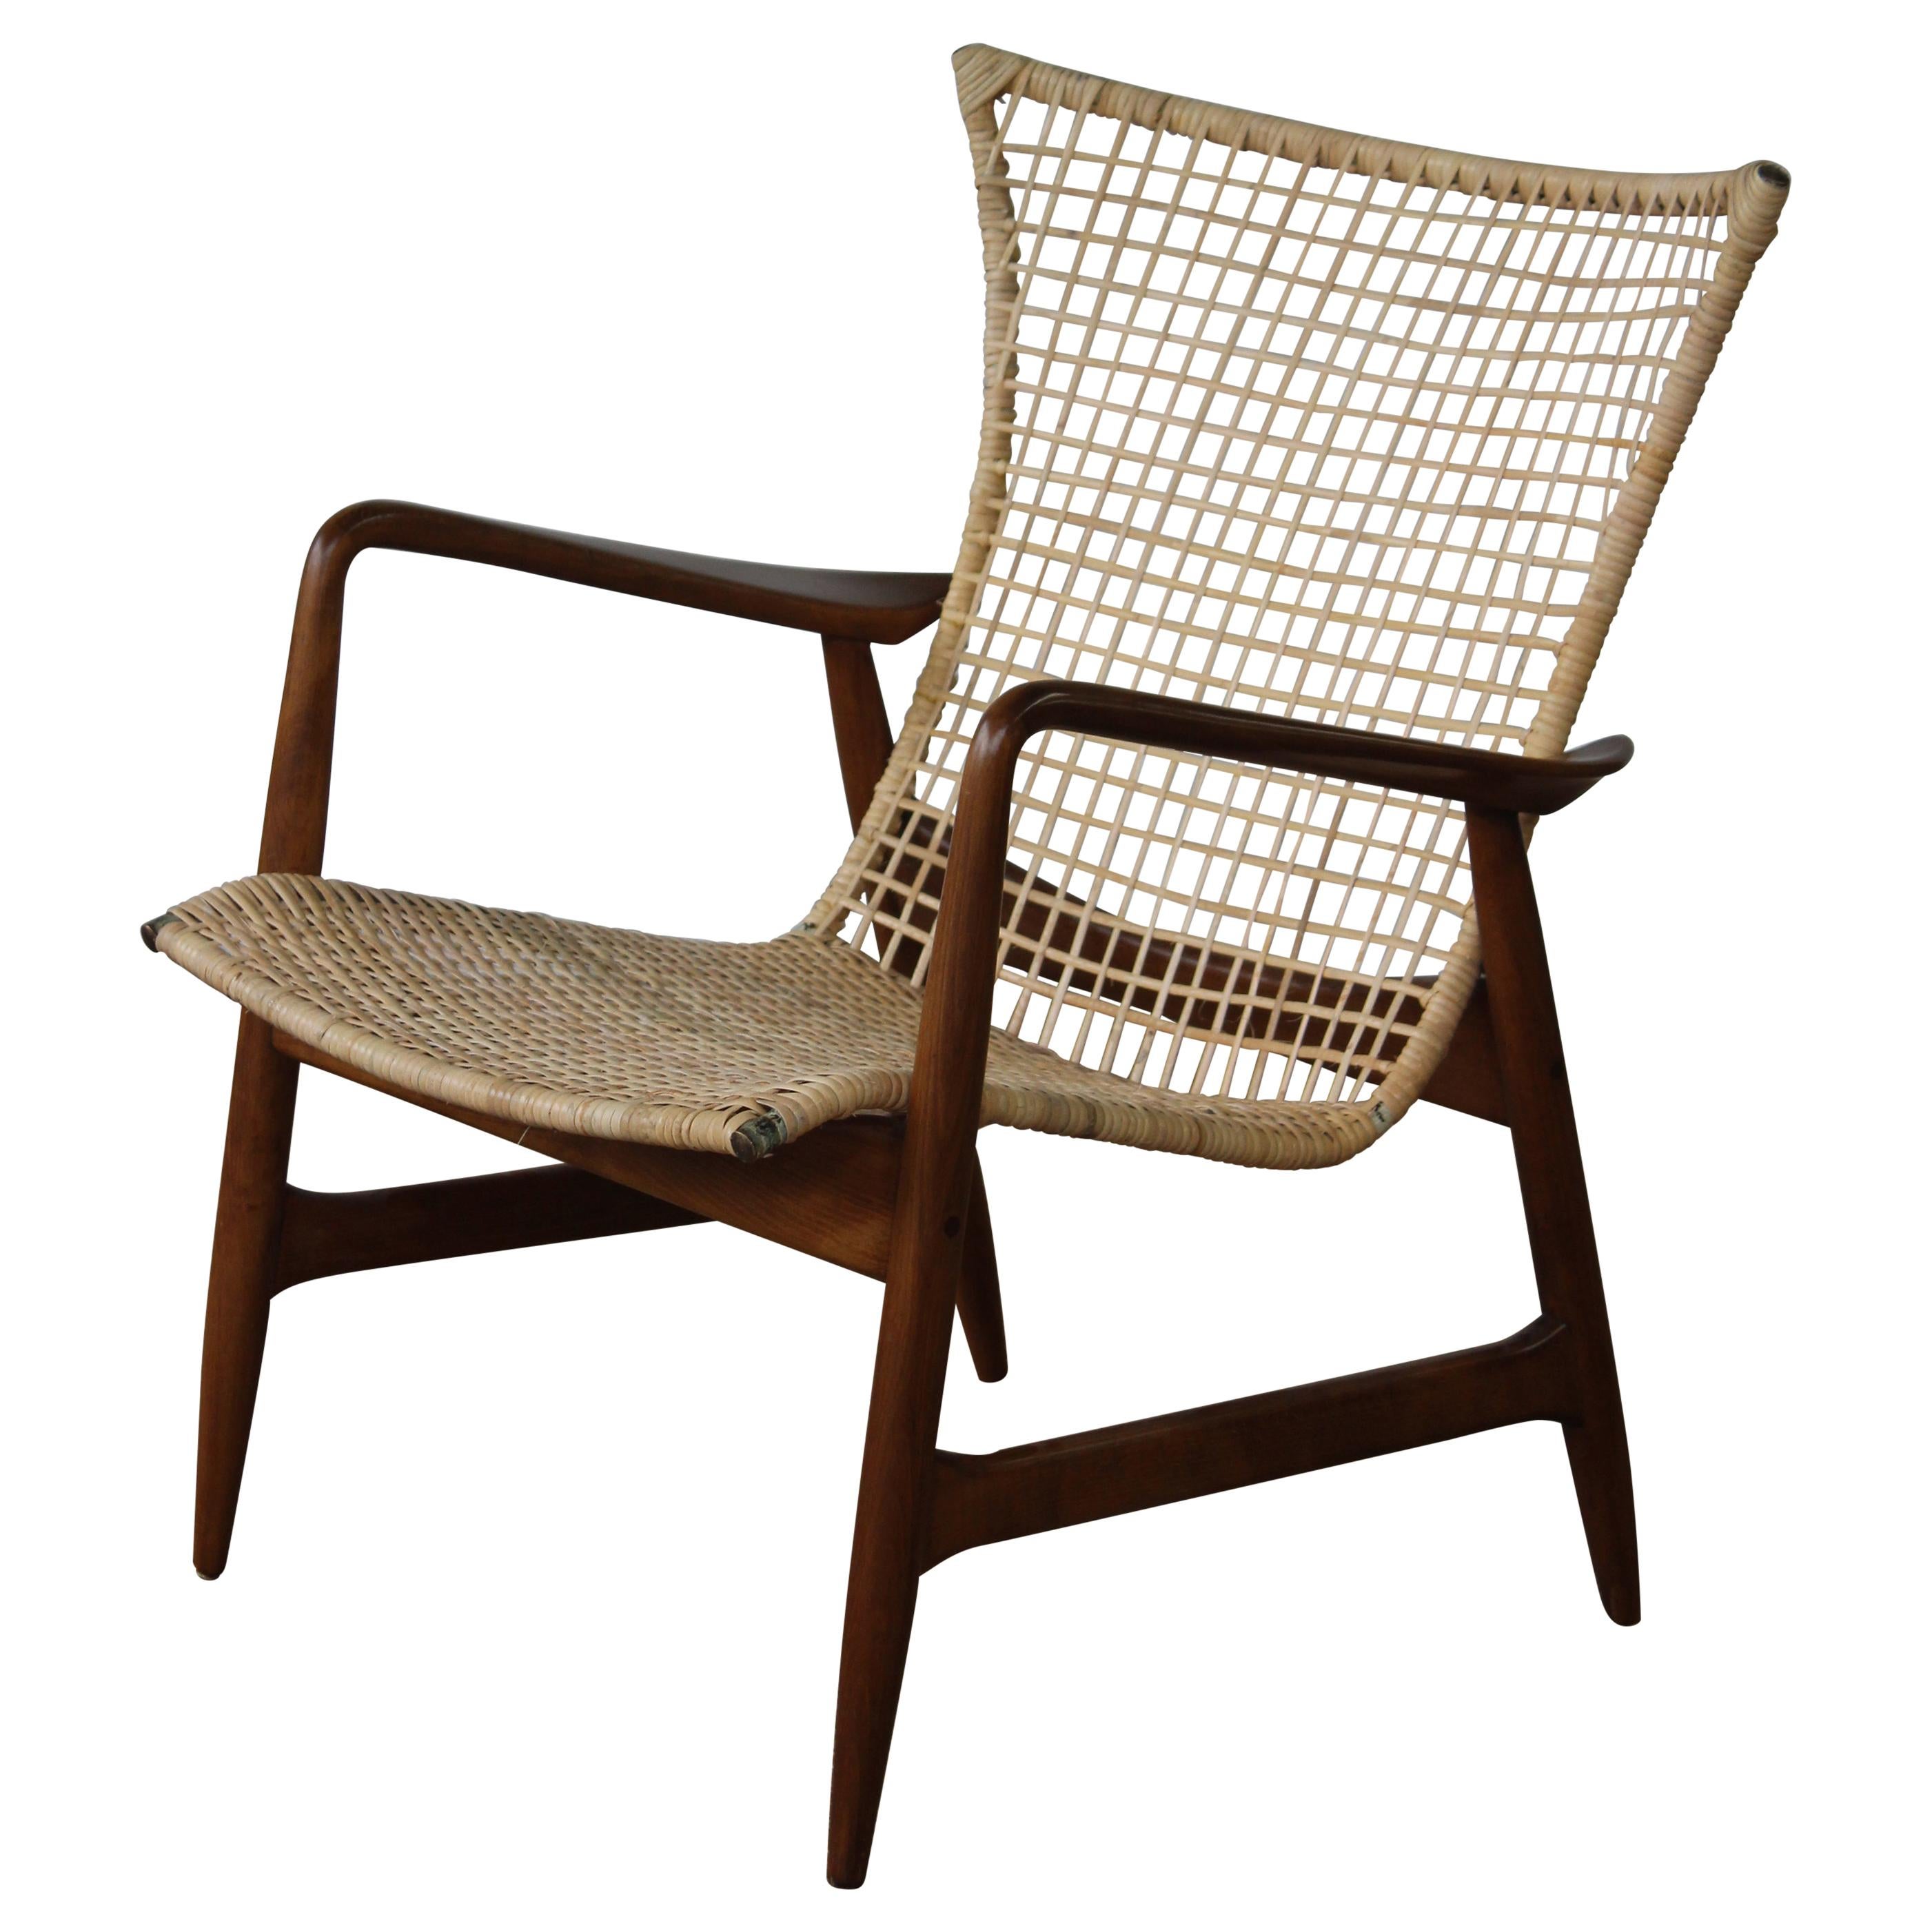 Beech and Rattan Chair by Kofod-Larsen, Denmark, 1950s